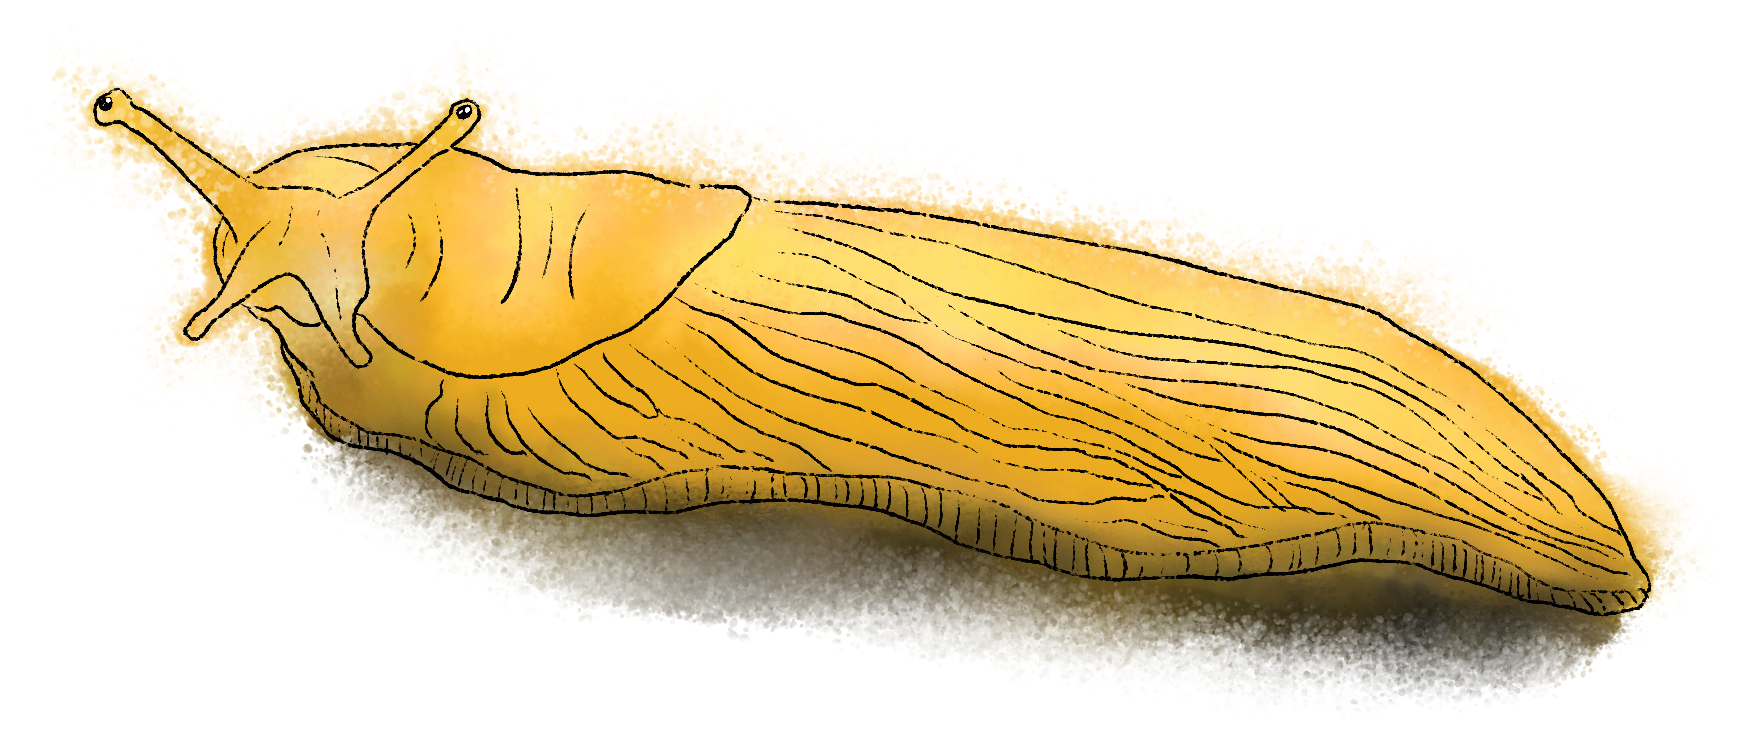 a sketch of a banana slug